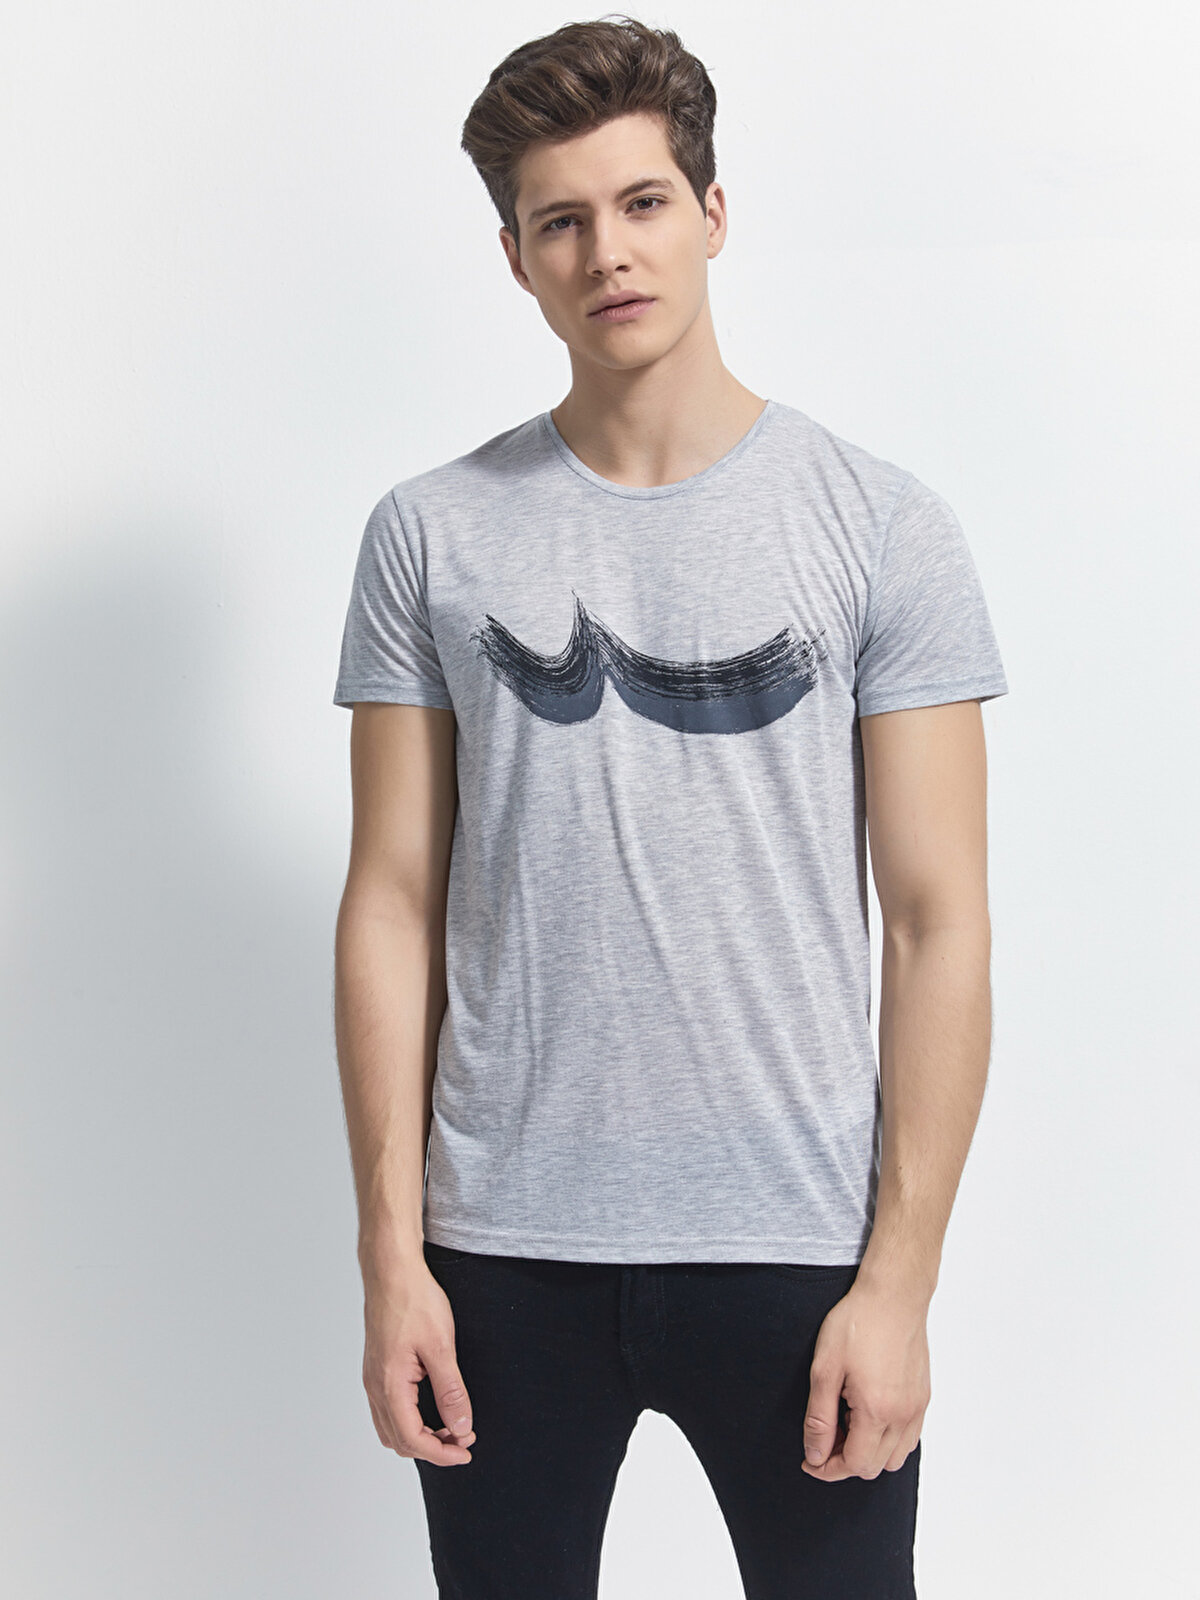 Ltb Logo Grey T-shirt | T-Shirt & Athlete | MEN · LTB